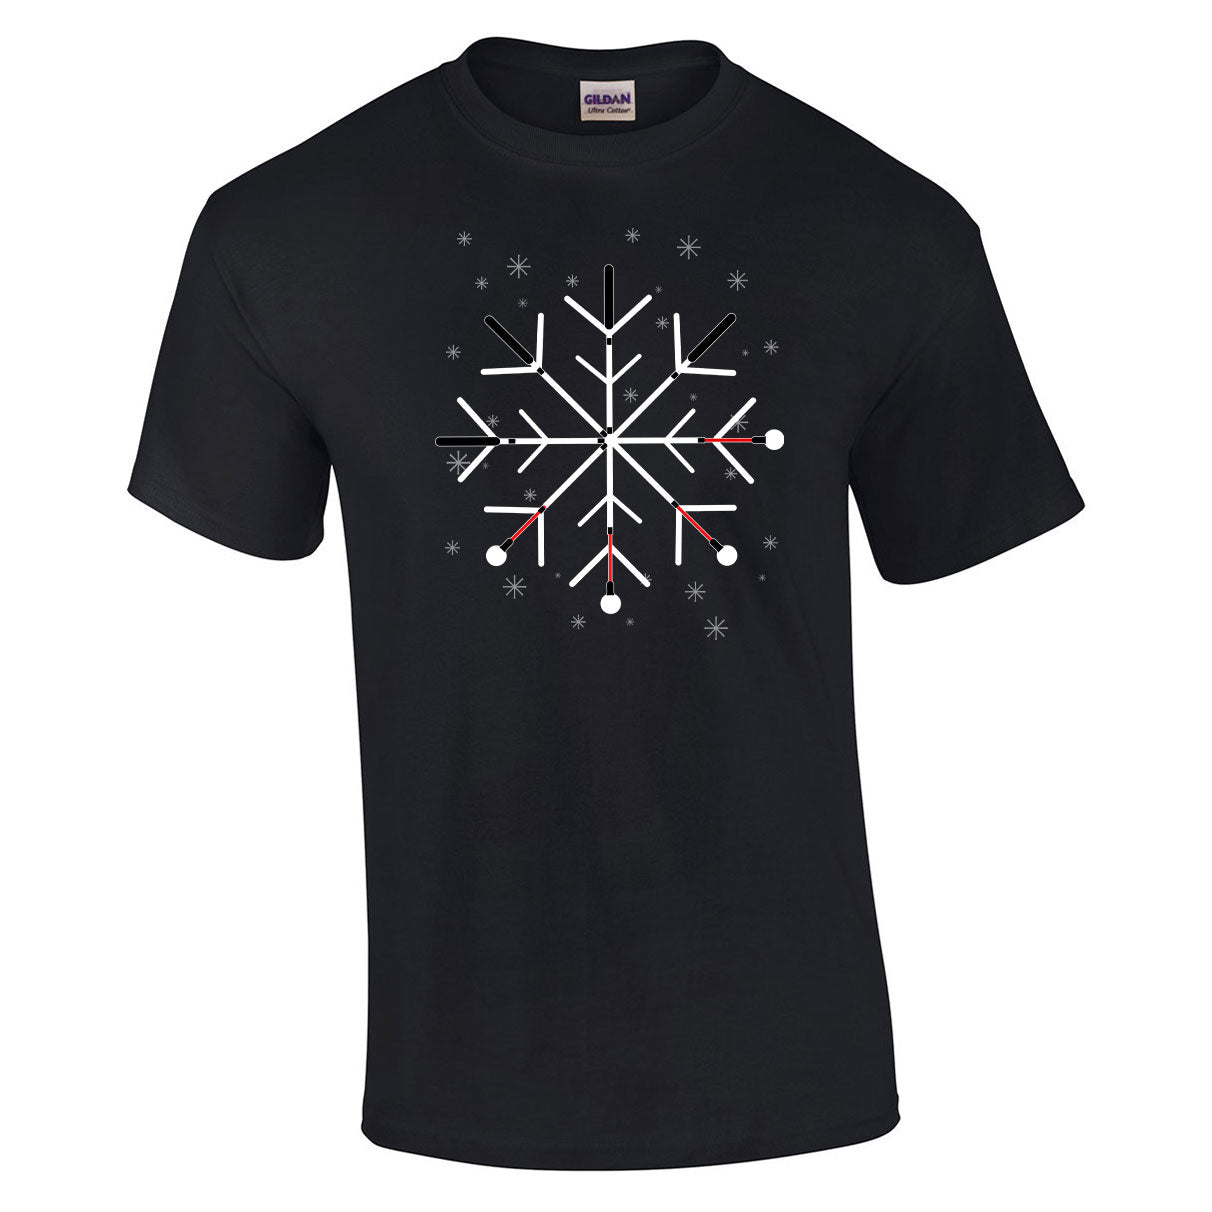 Snowflake White Cane T-Shirt - Black